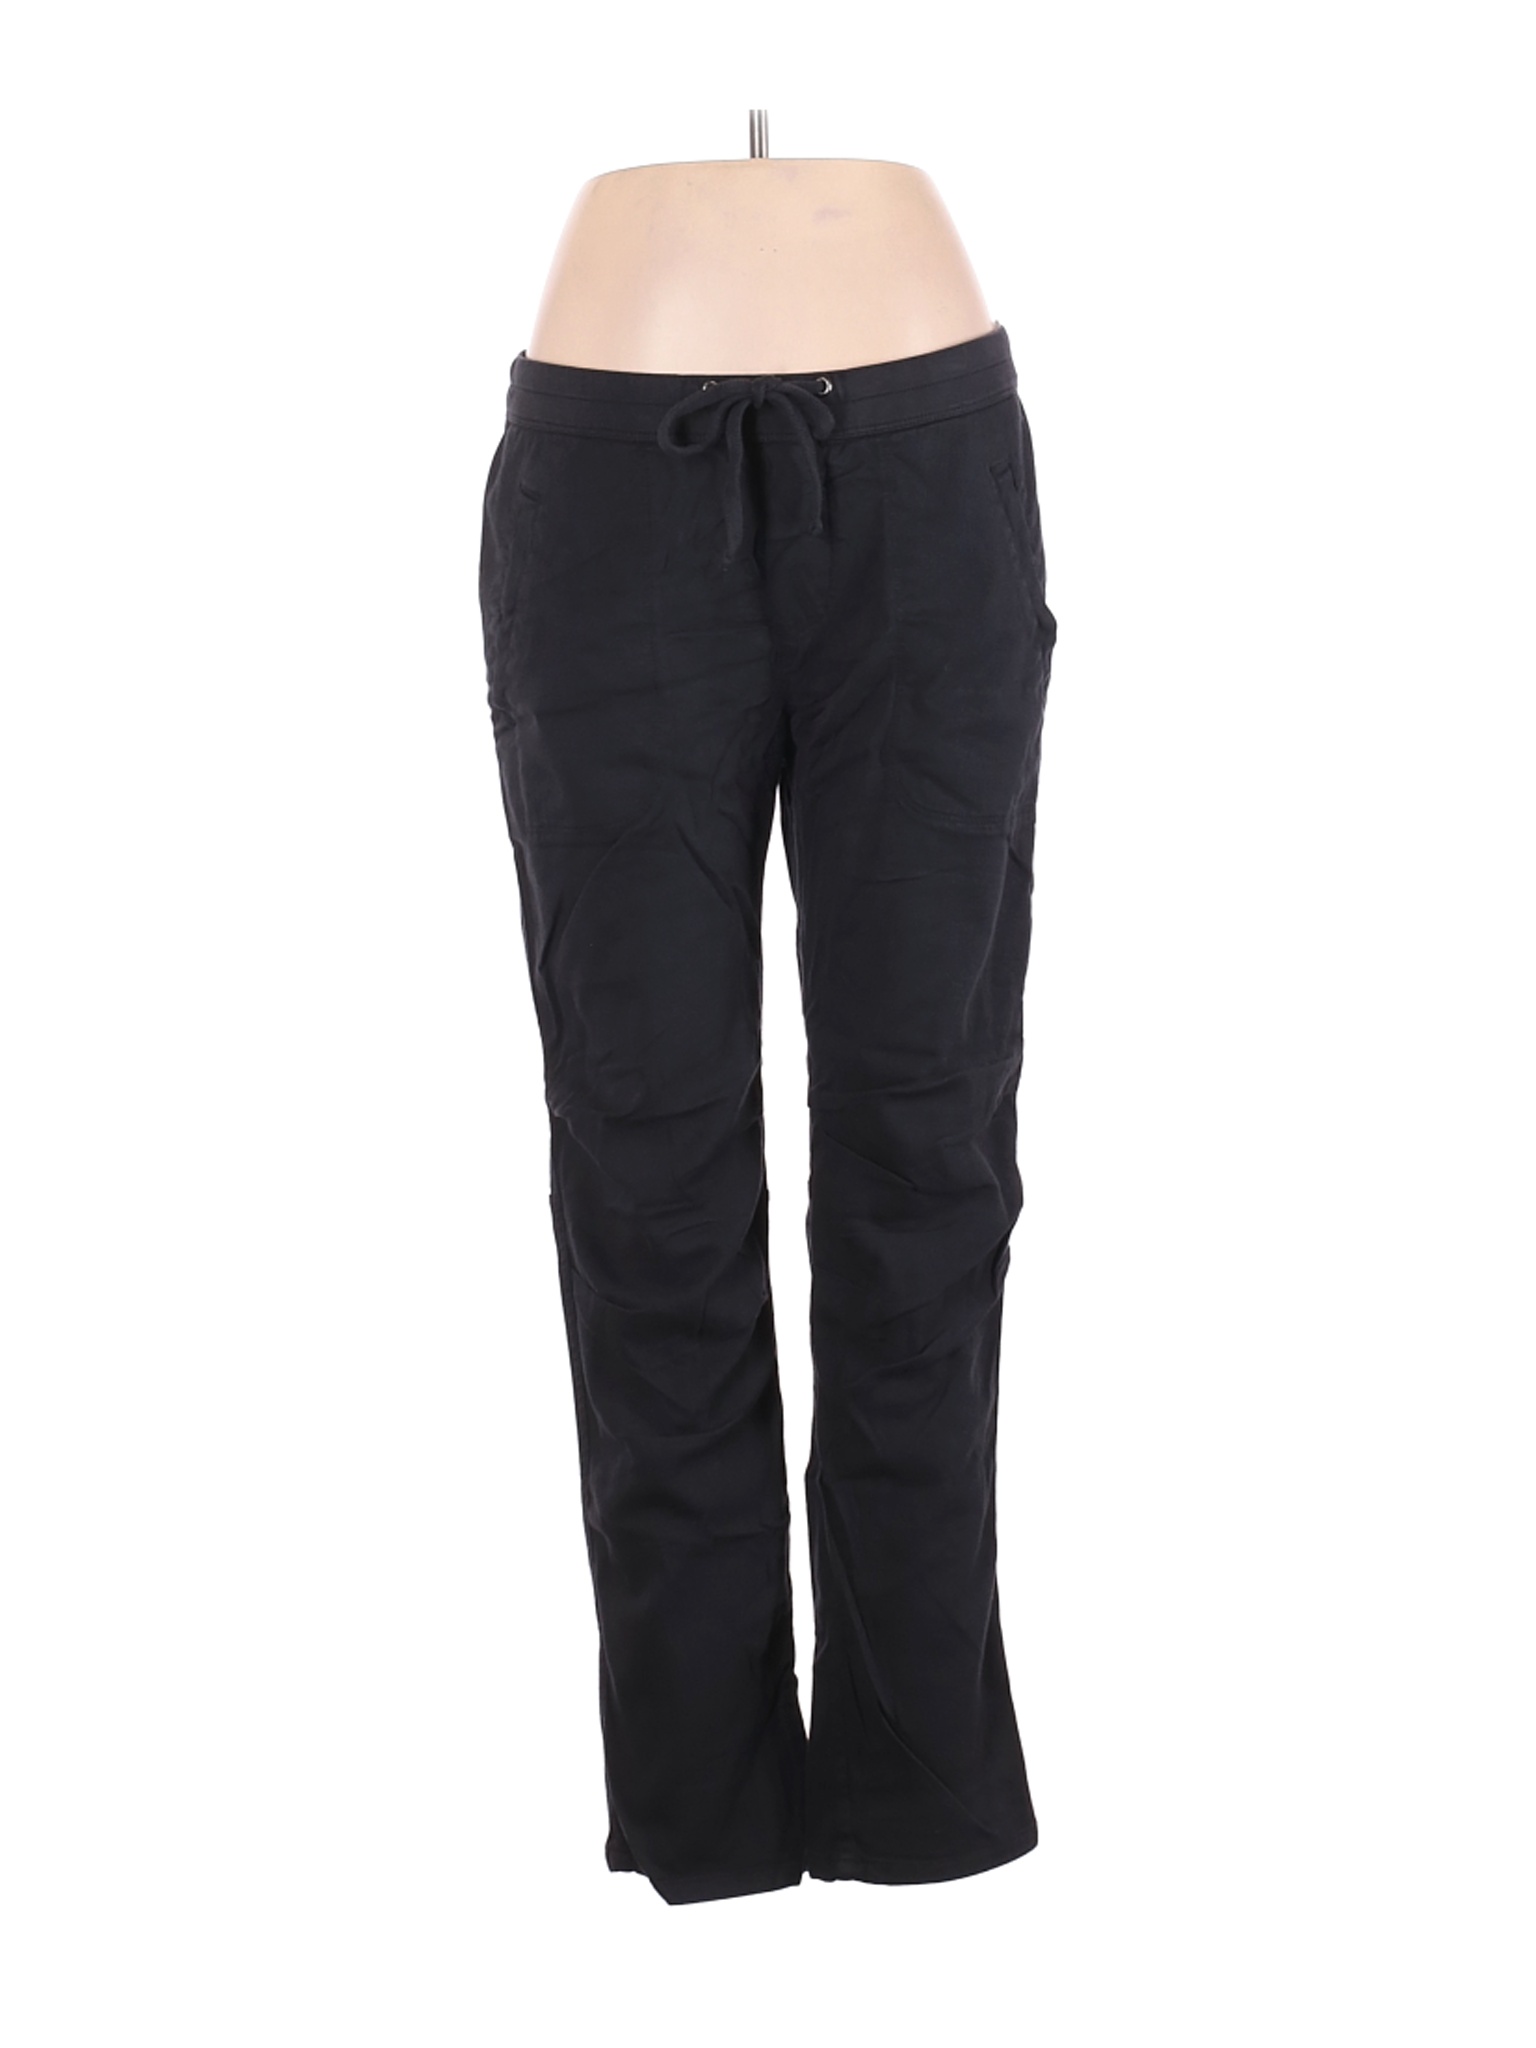 James Perse Women Black Casual Pants L | eBay